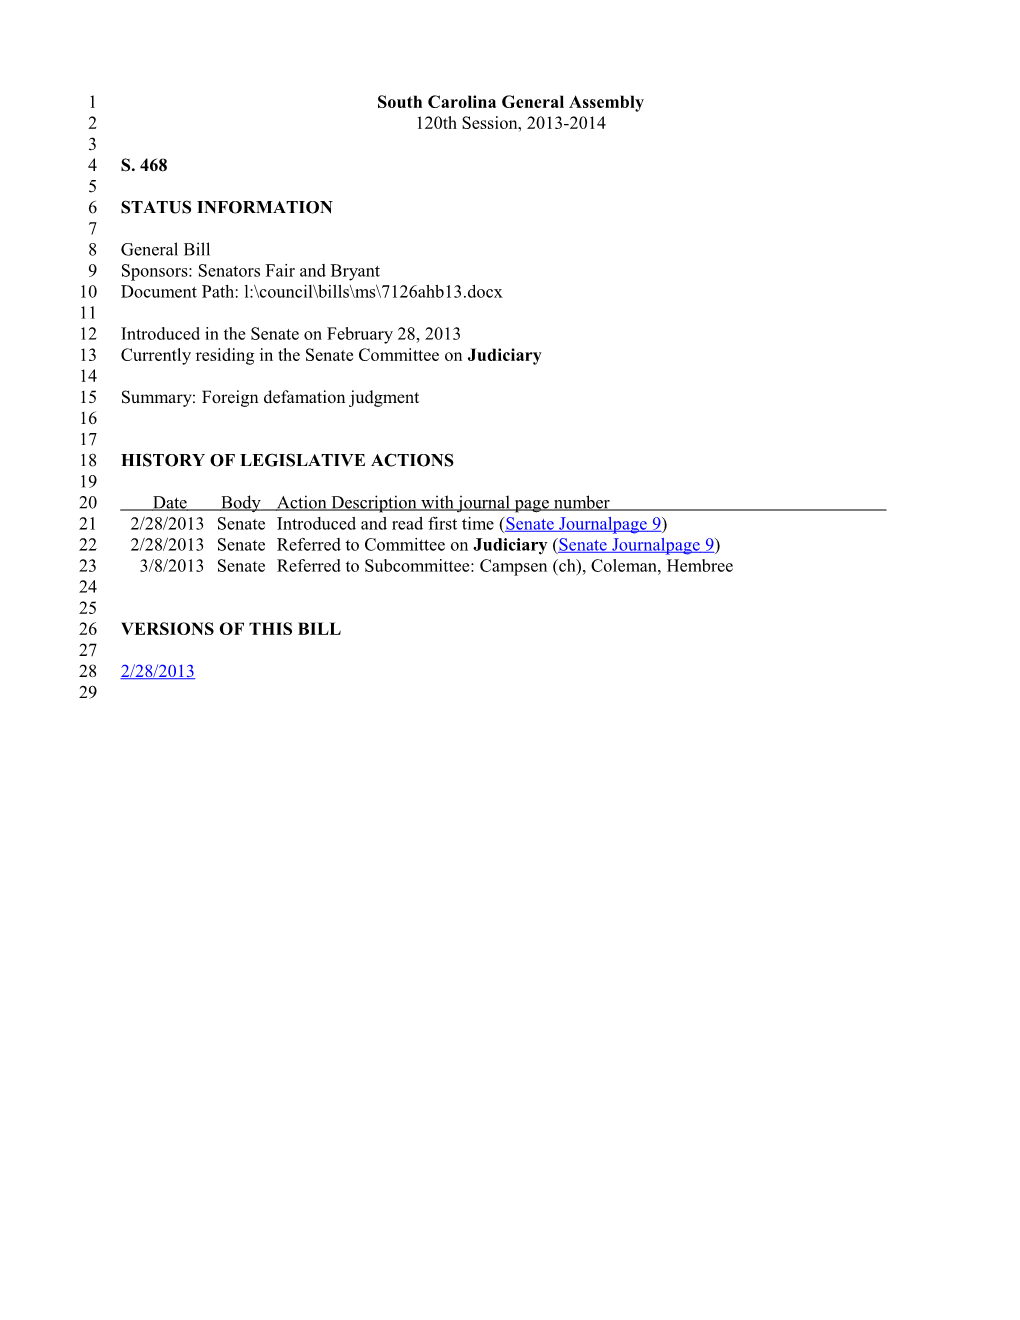 2013-2014 Bill 468: Foreign Defamation Judgment - South Carolina Legislature Online